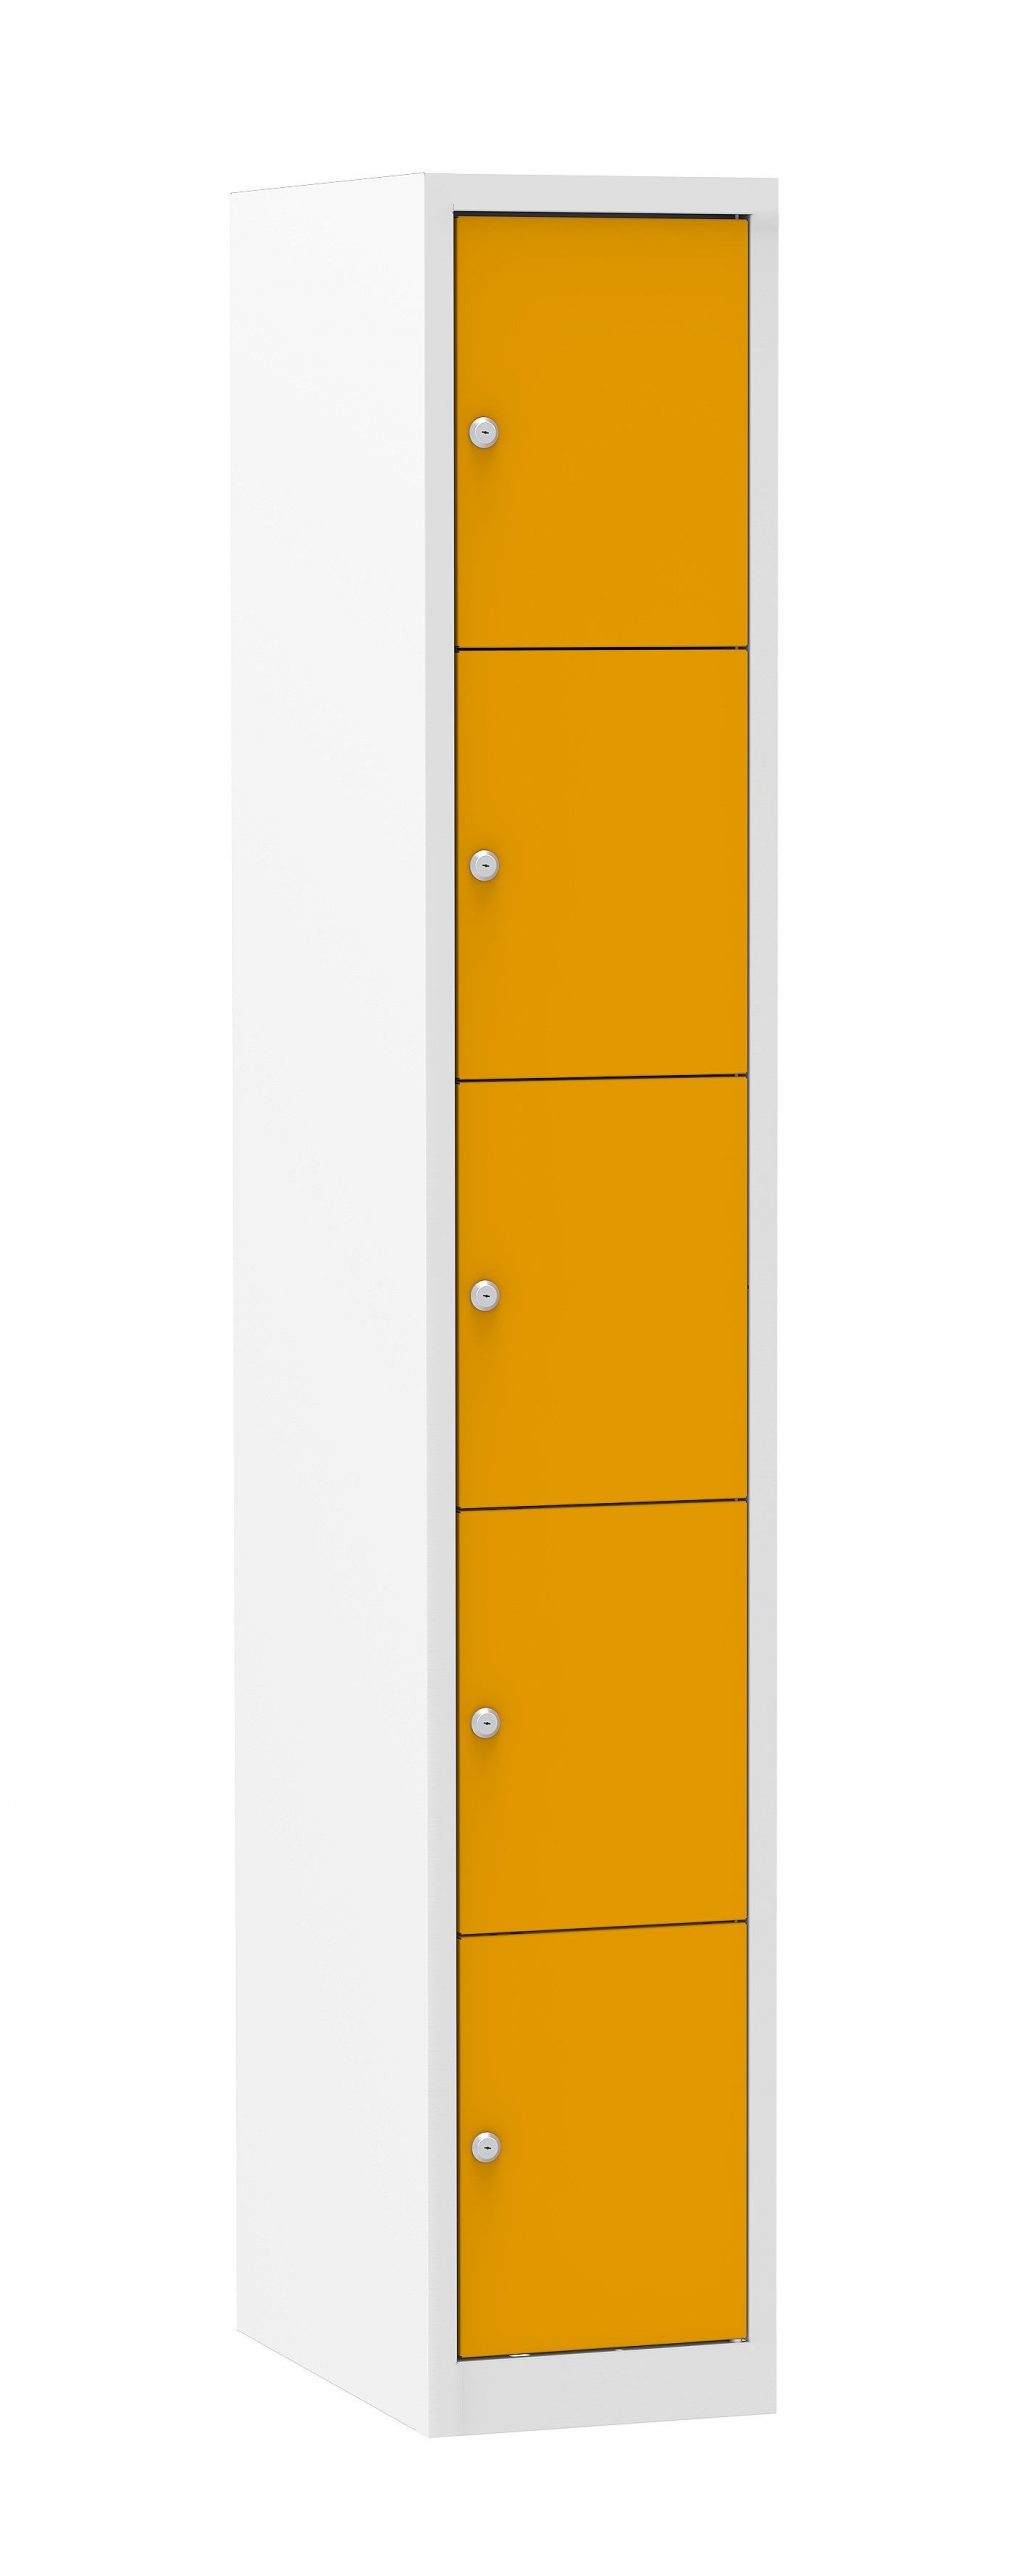 Elektropositief Mannelijkheid bodem Multicolor locker 30cm breed, 1-koloms, 5-deurs | Kantoormeubel4sale